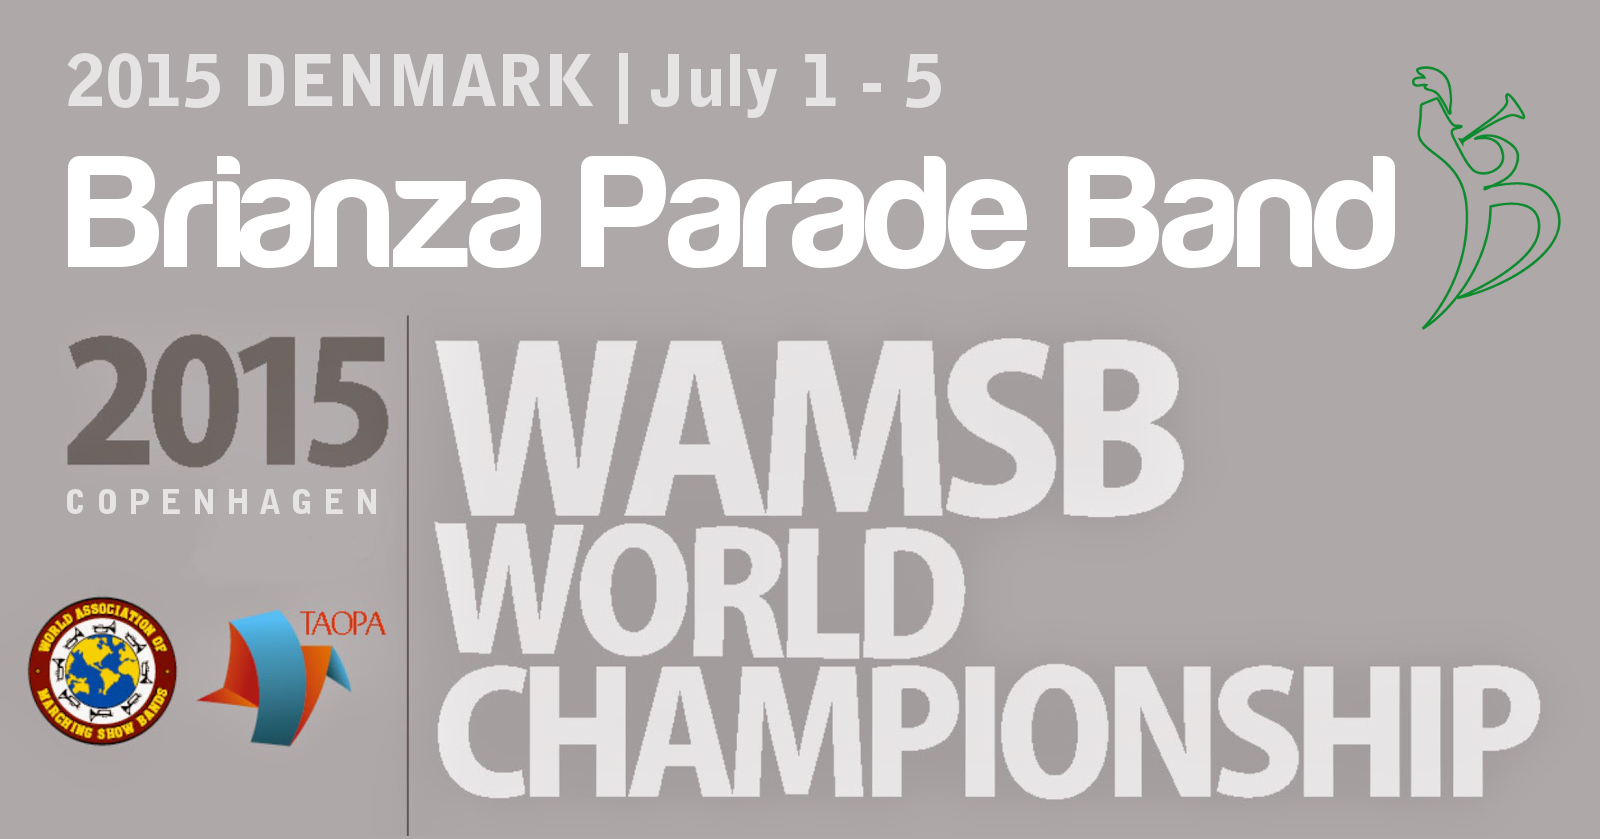 Brianza WAMSB world championship copenhagen